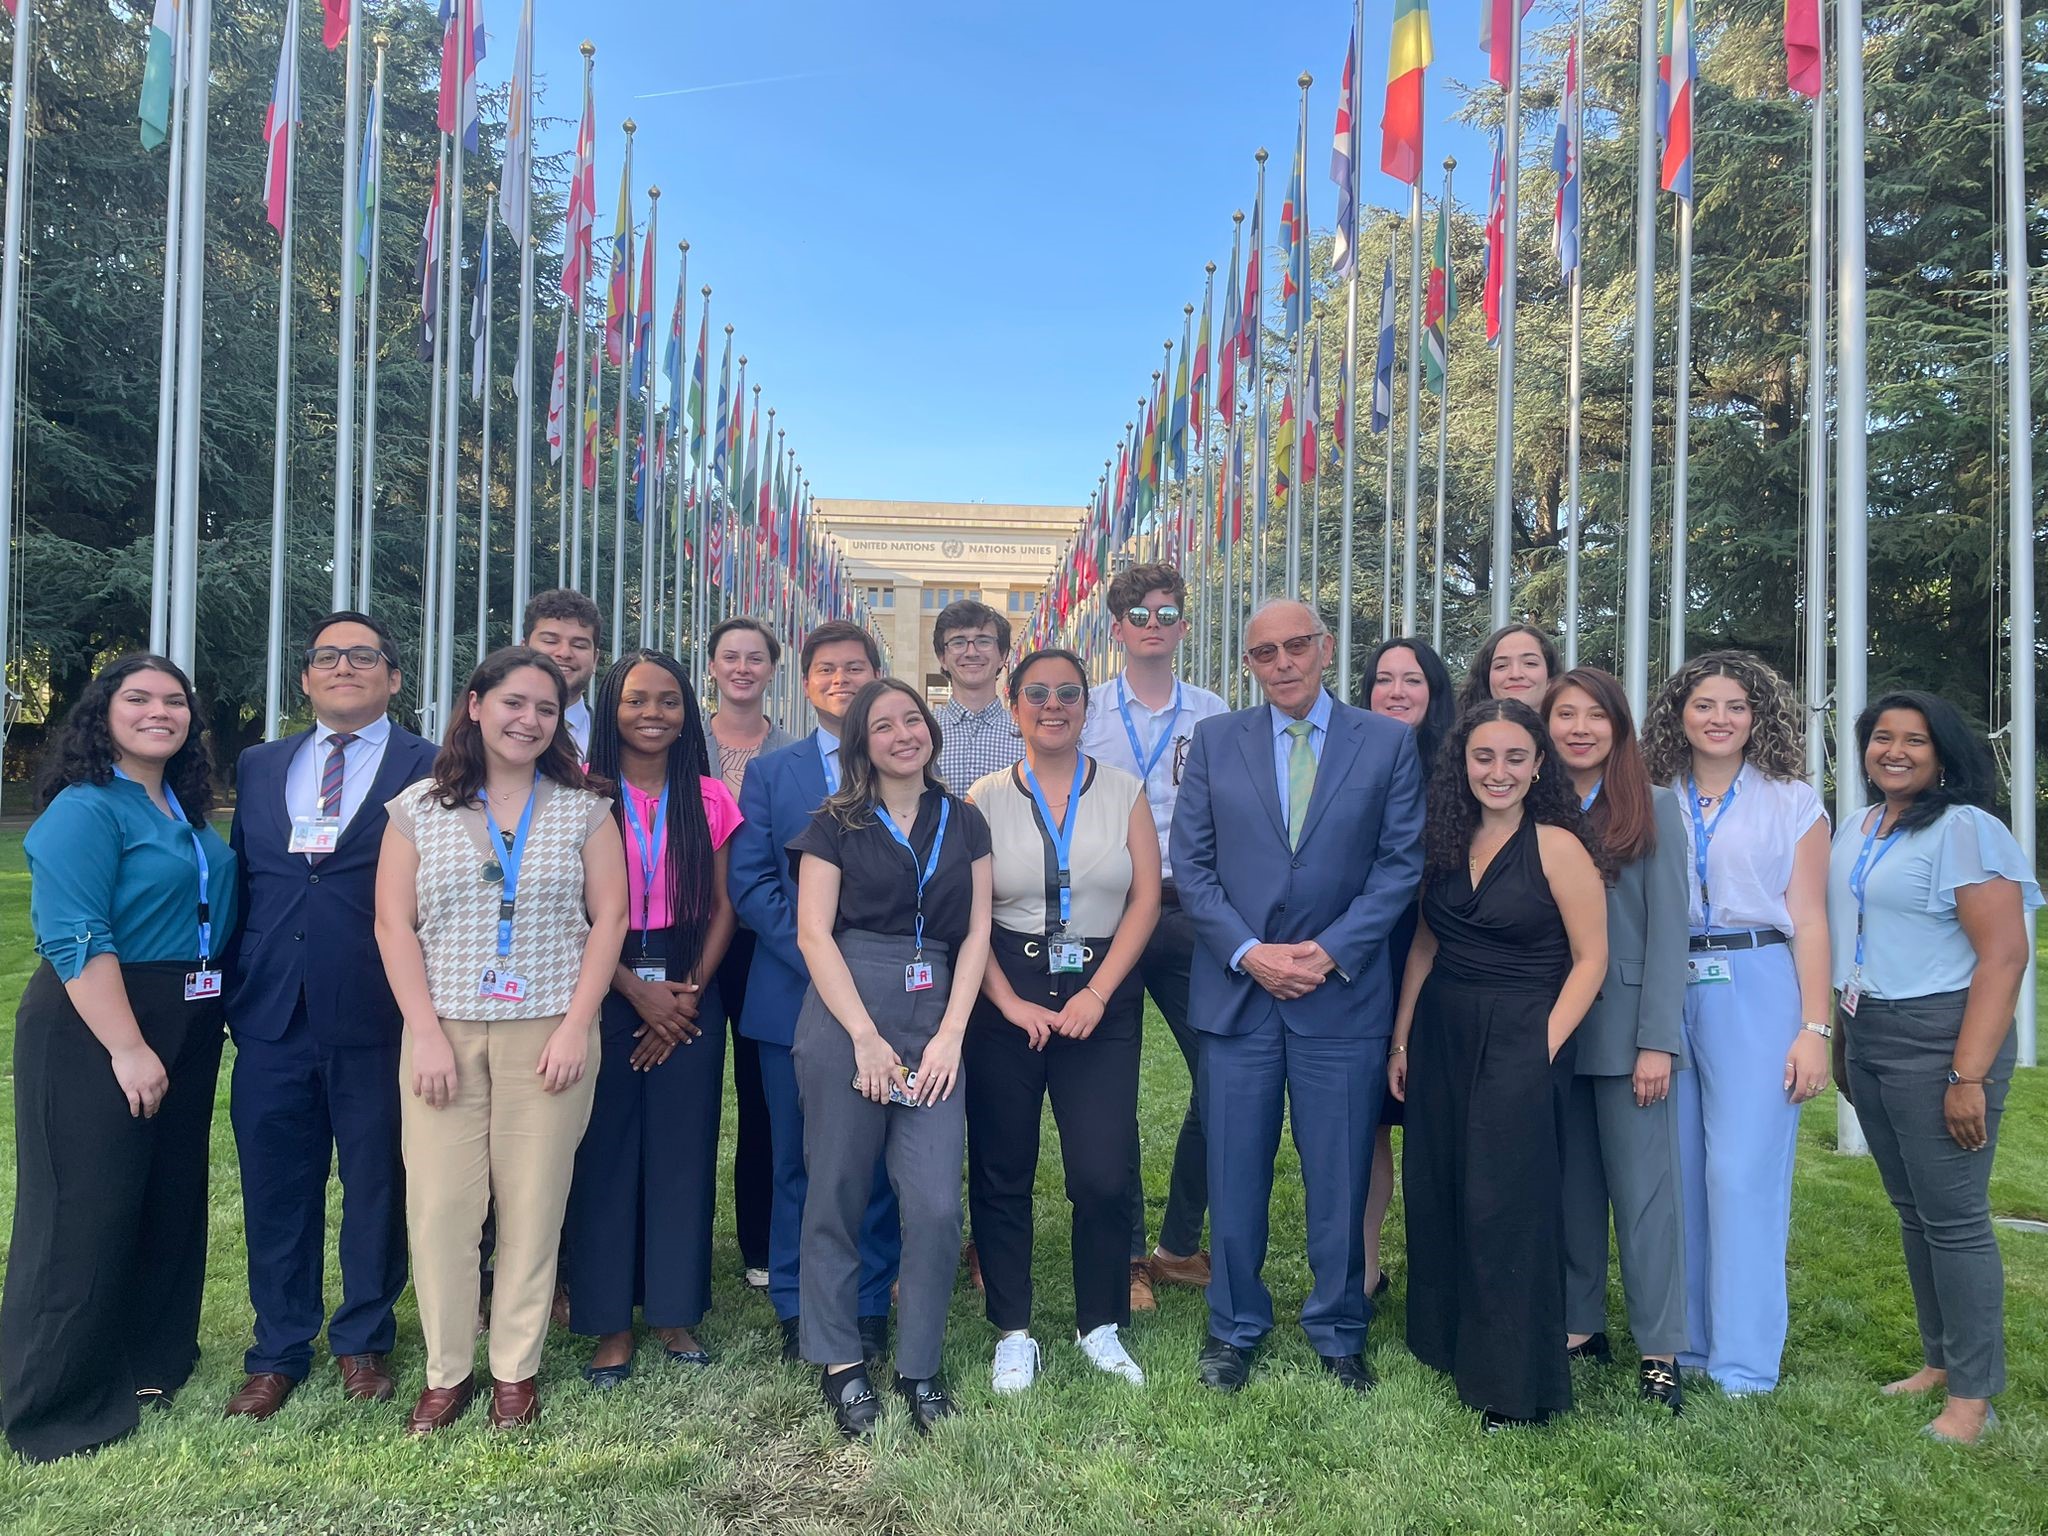 Geneva: ILC Session at the United Nations